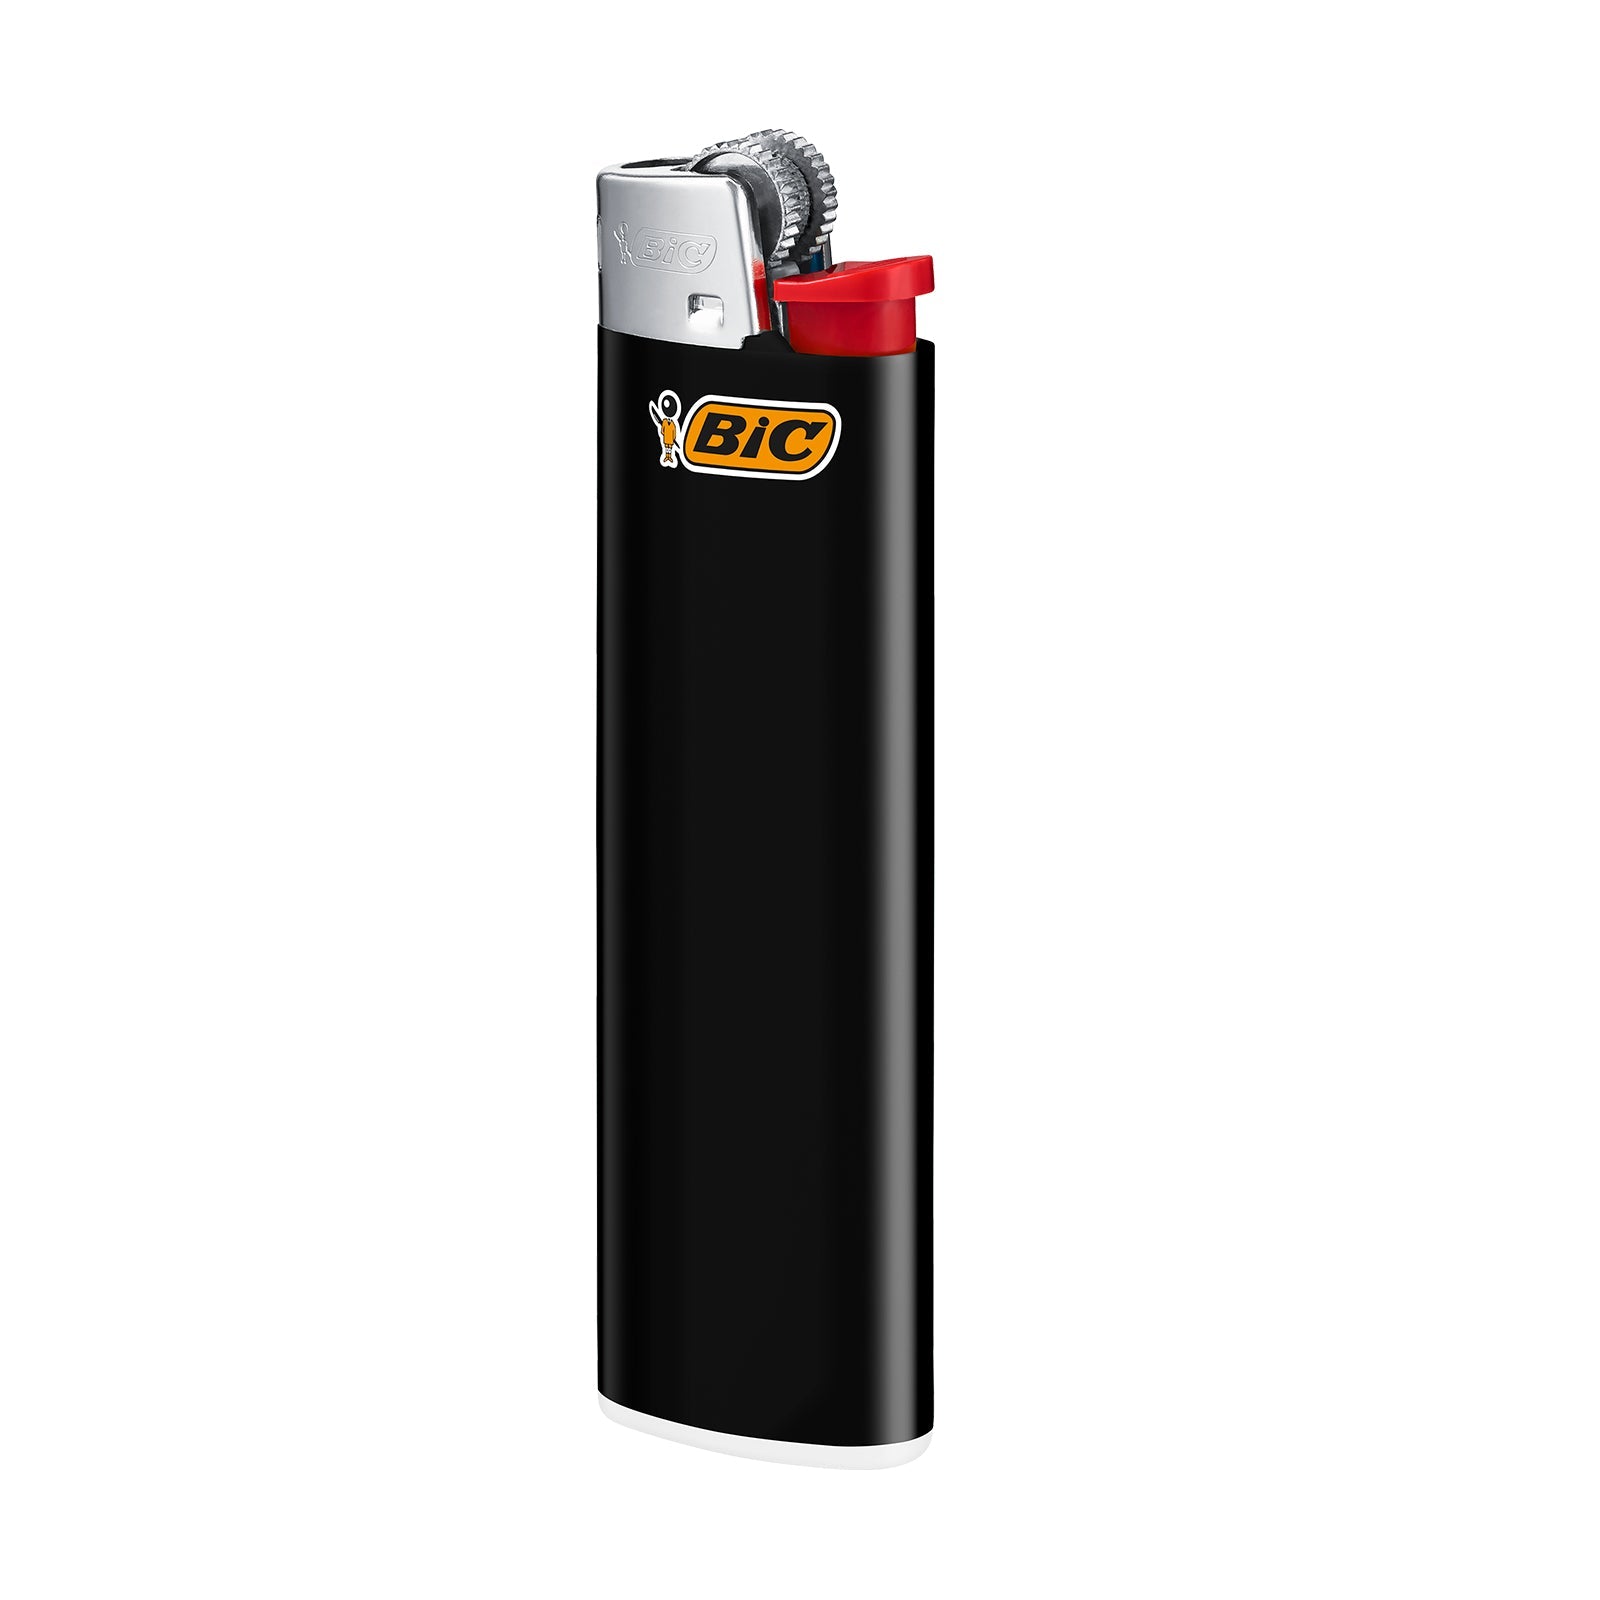 BIC J3 Standard Lighter